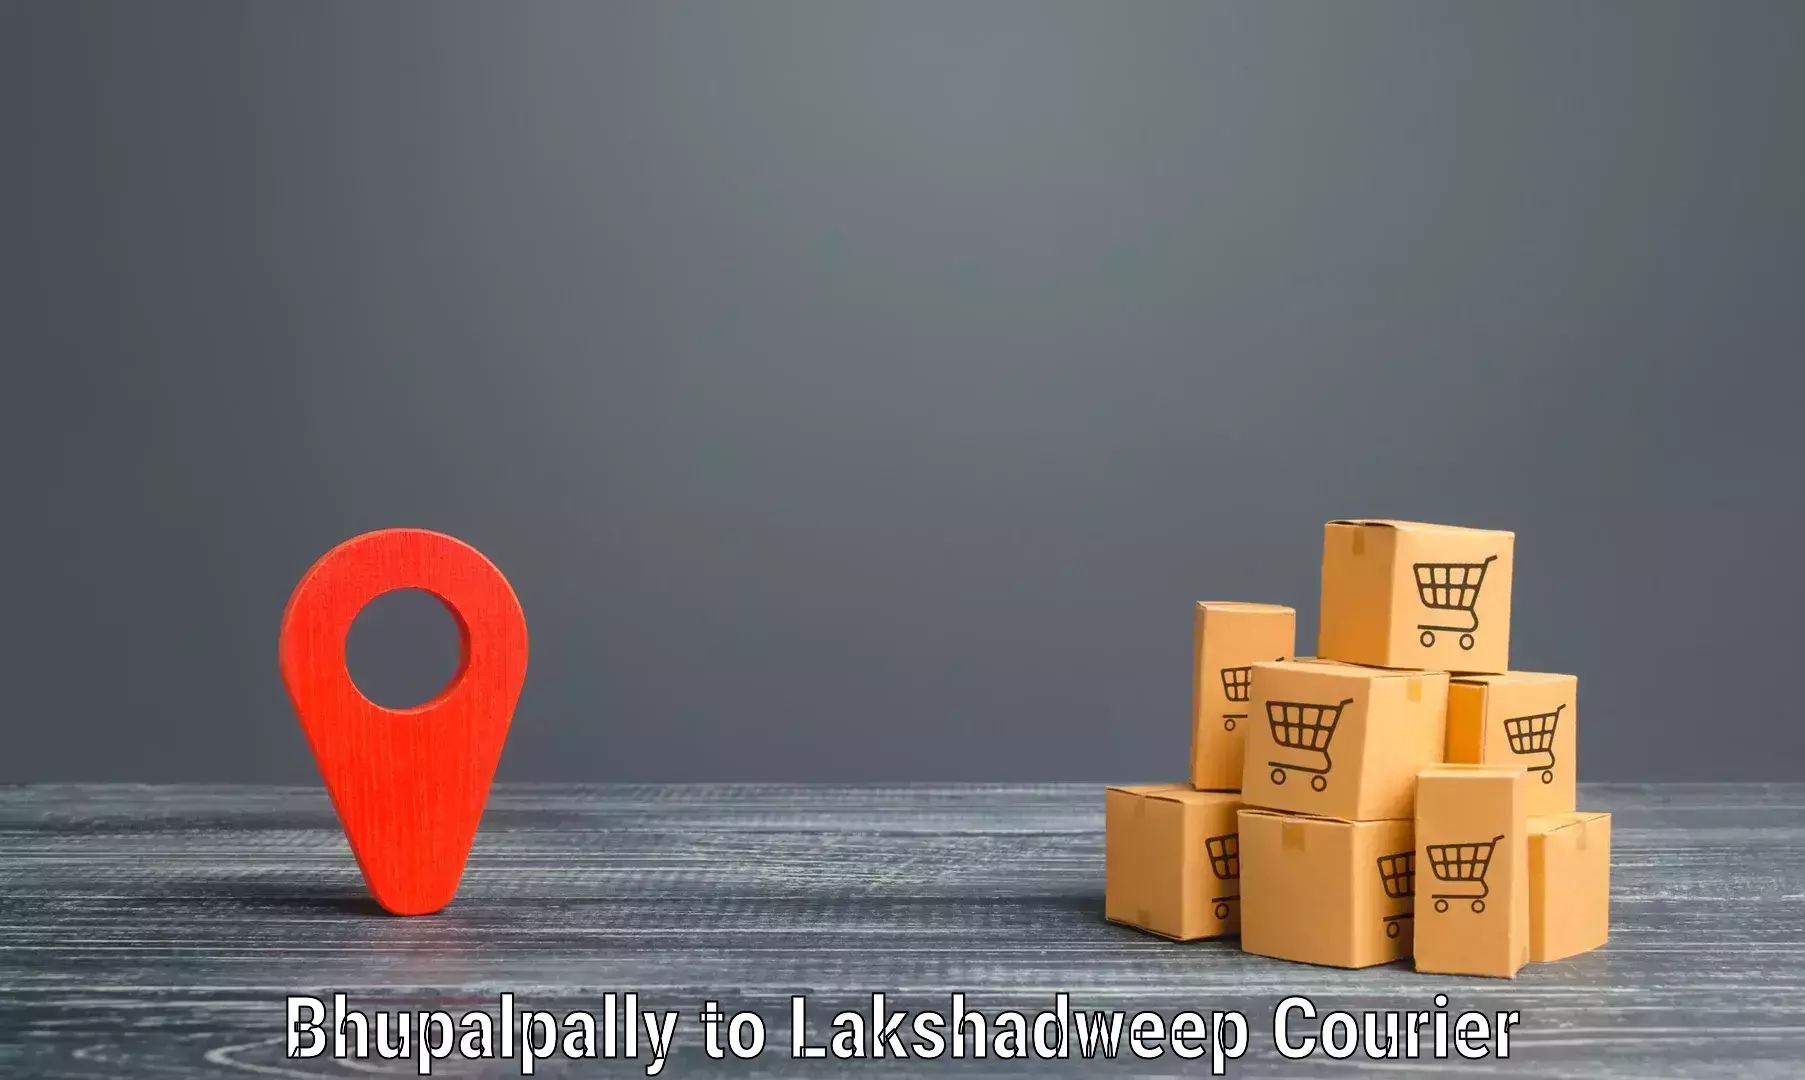 Digital shipping tools Bhupalpally to Lakshadweep